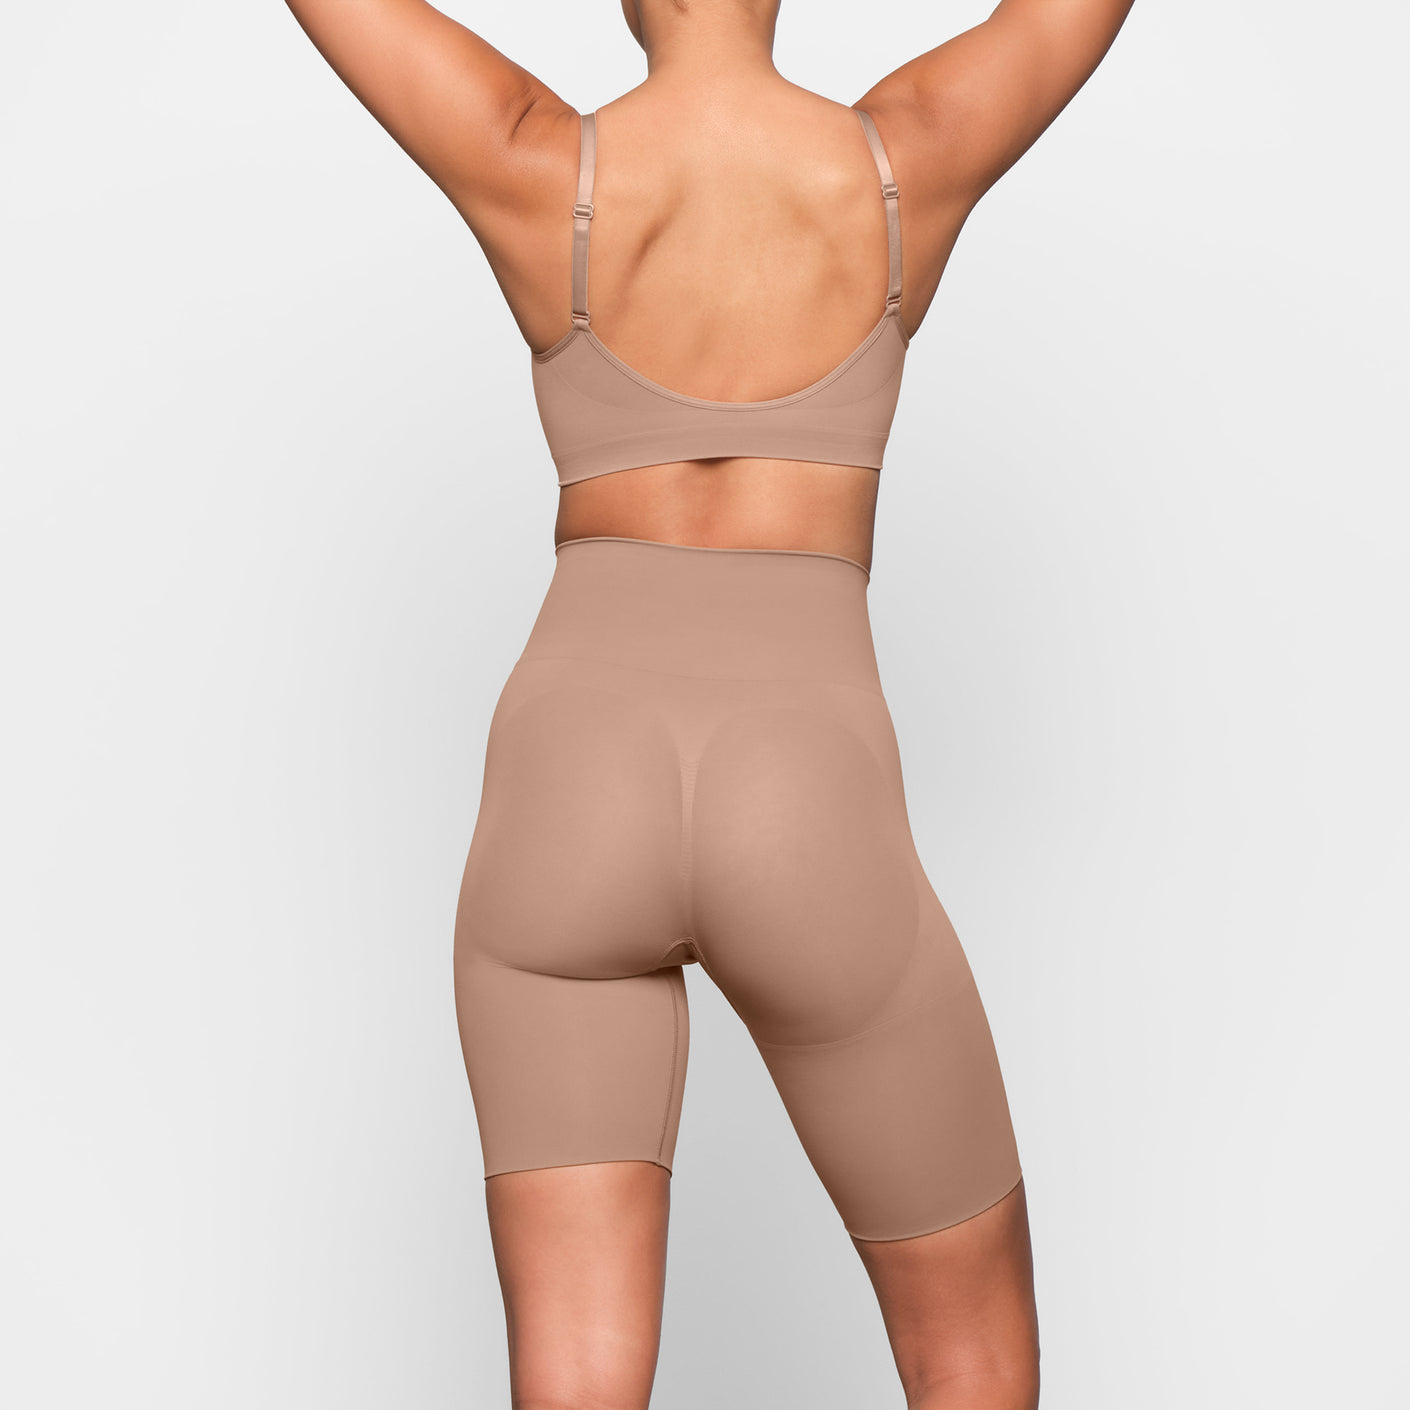 DSFEOIGY Double Compression Skims Butt Lifter Front Closure Tummy